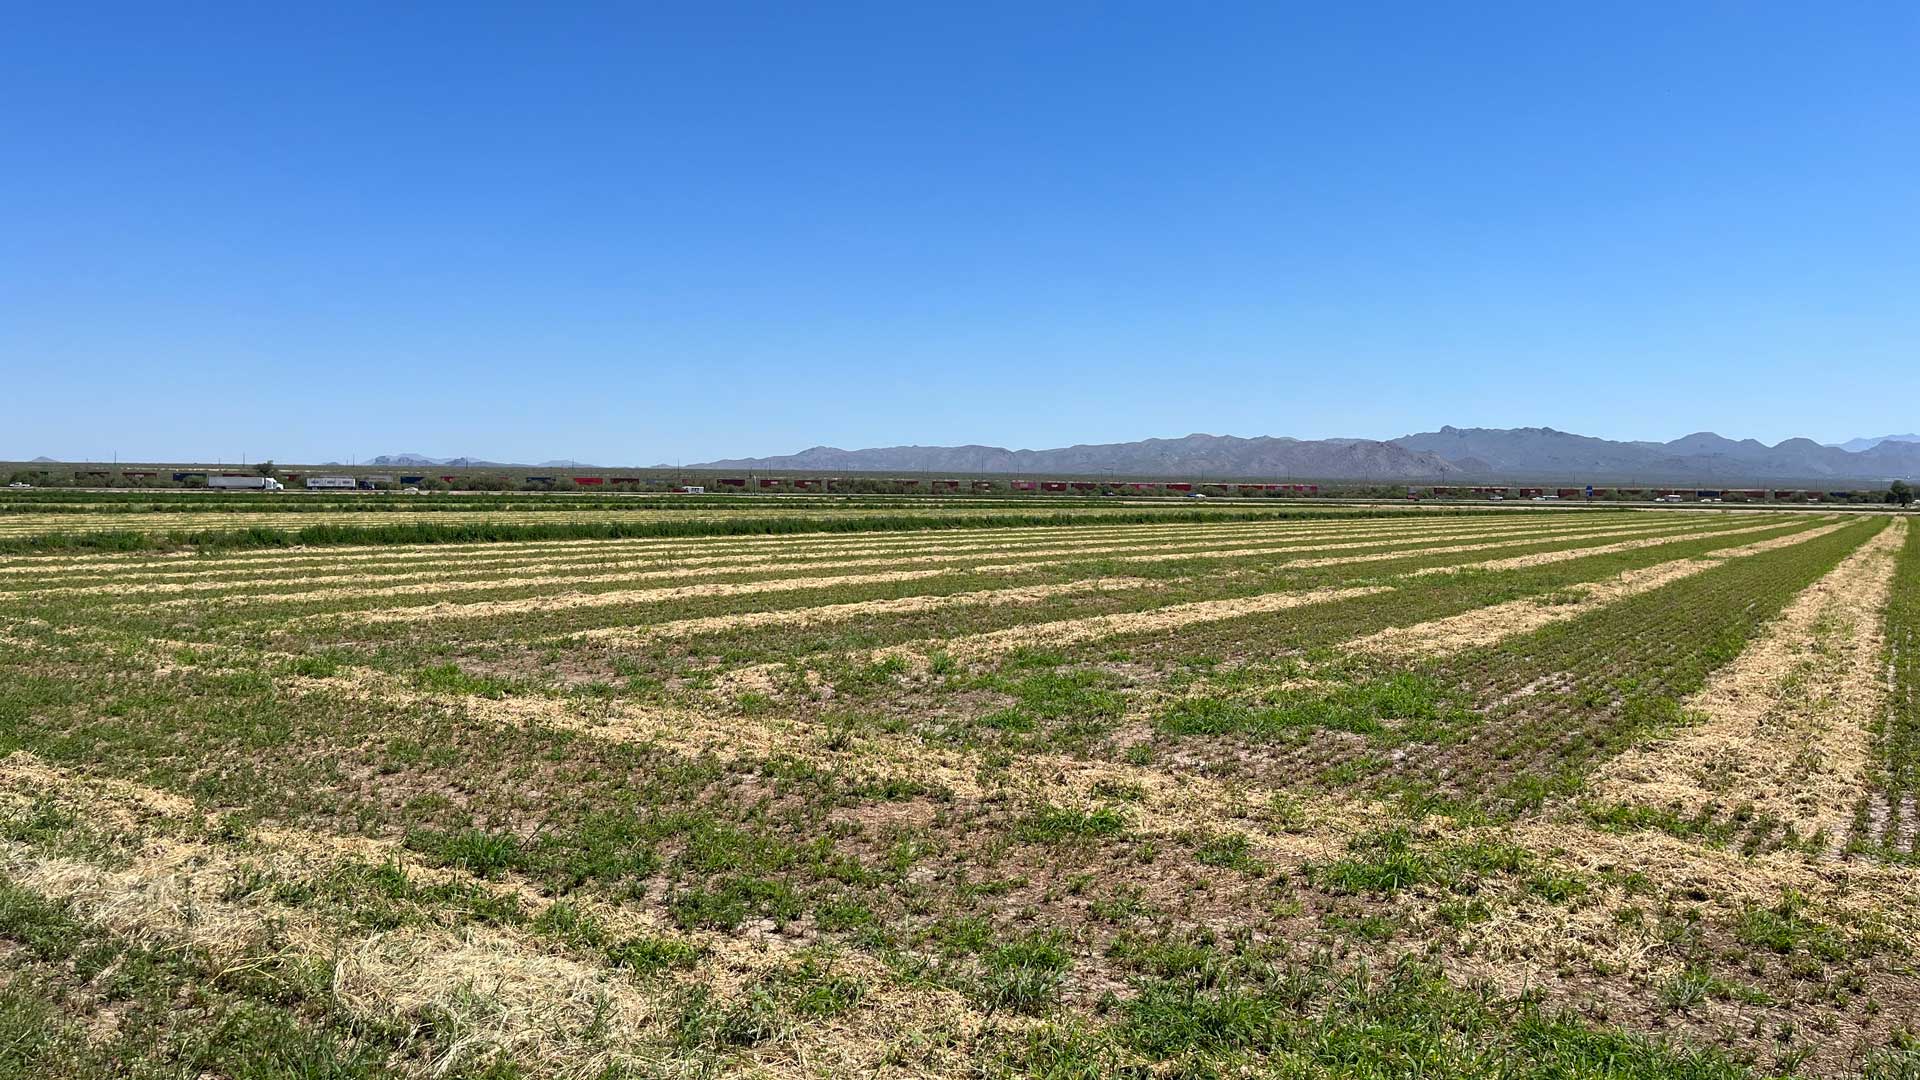 Why is alfalfa one of Arizona's biggest crops?